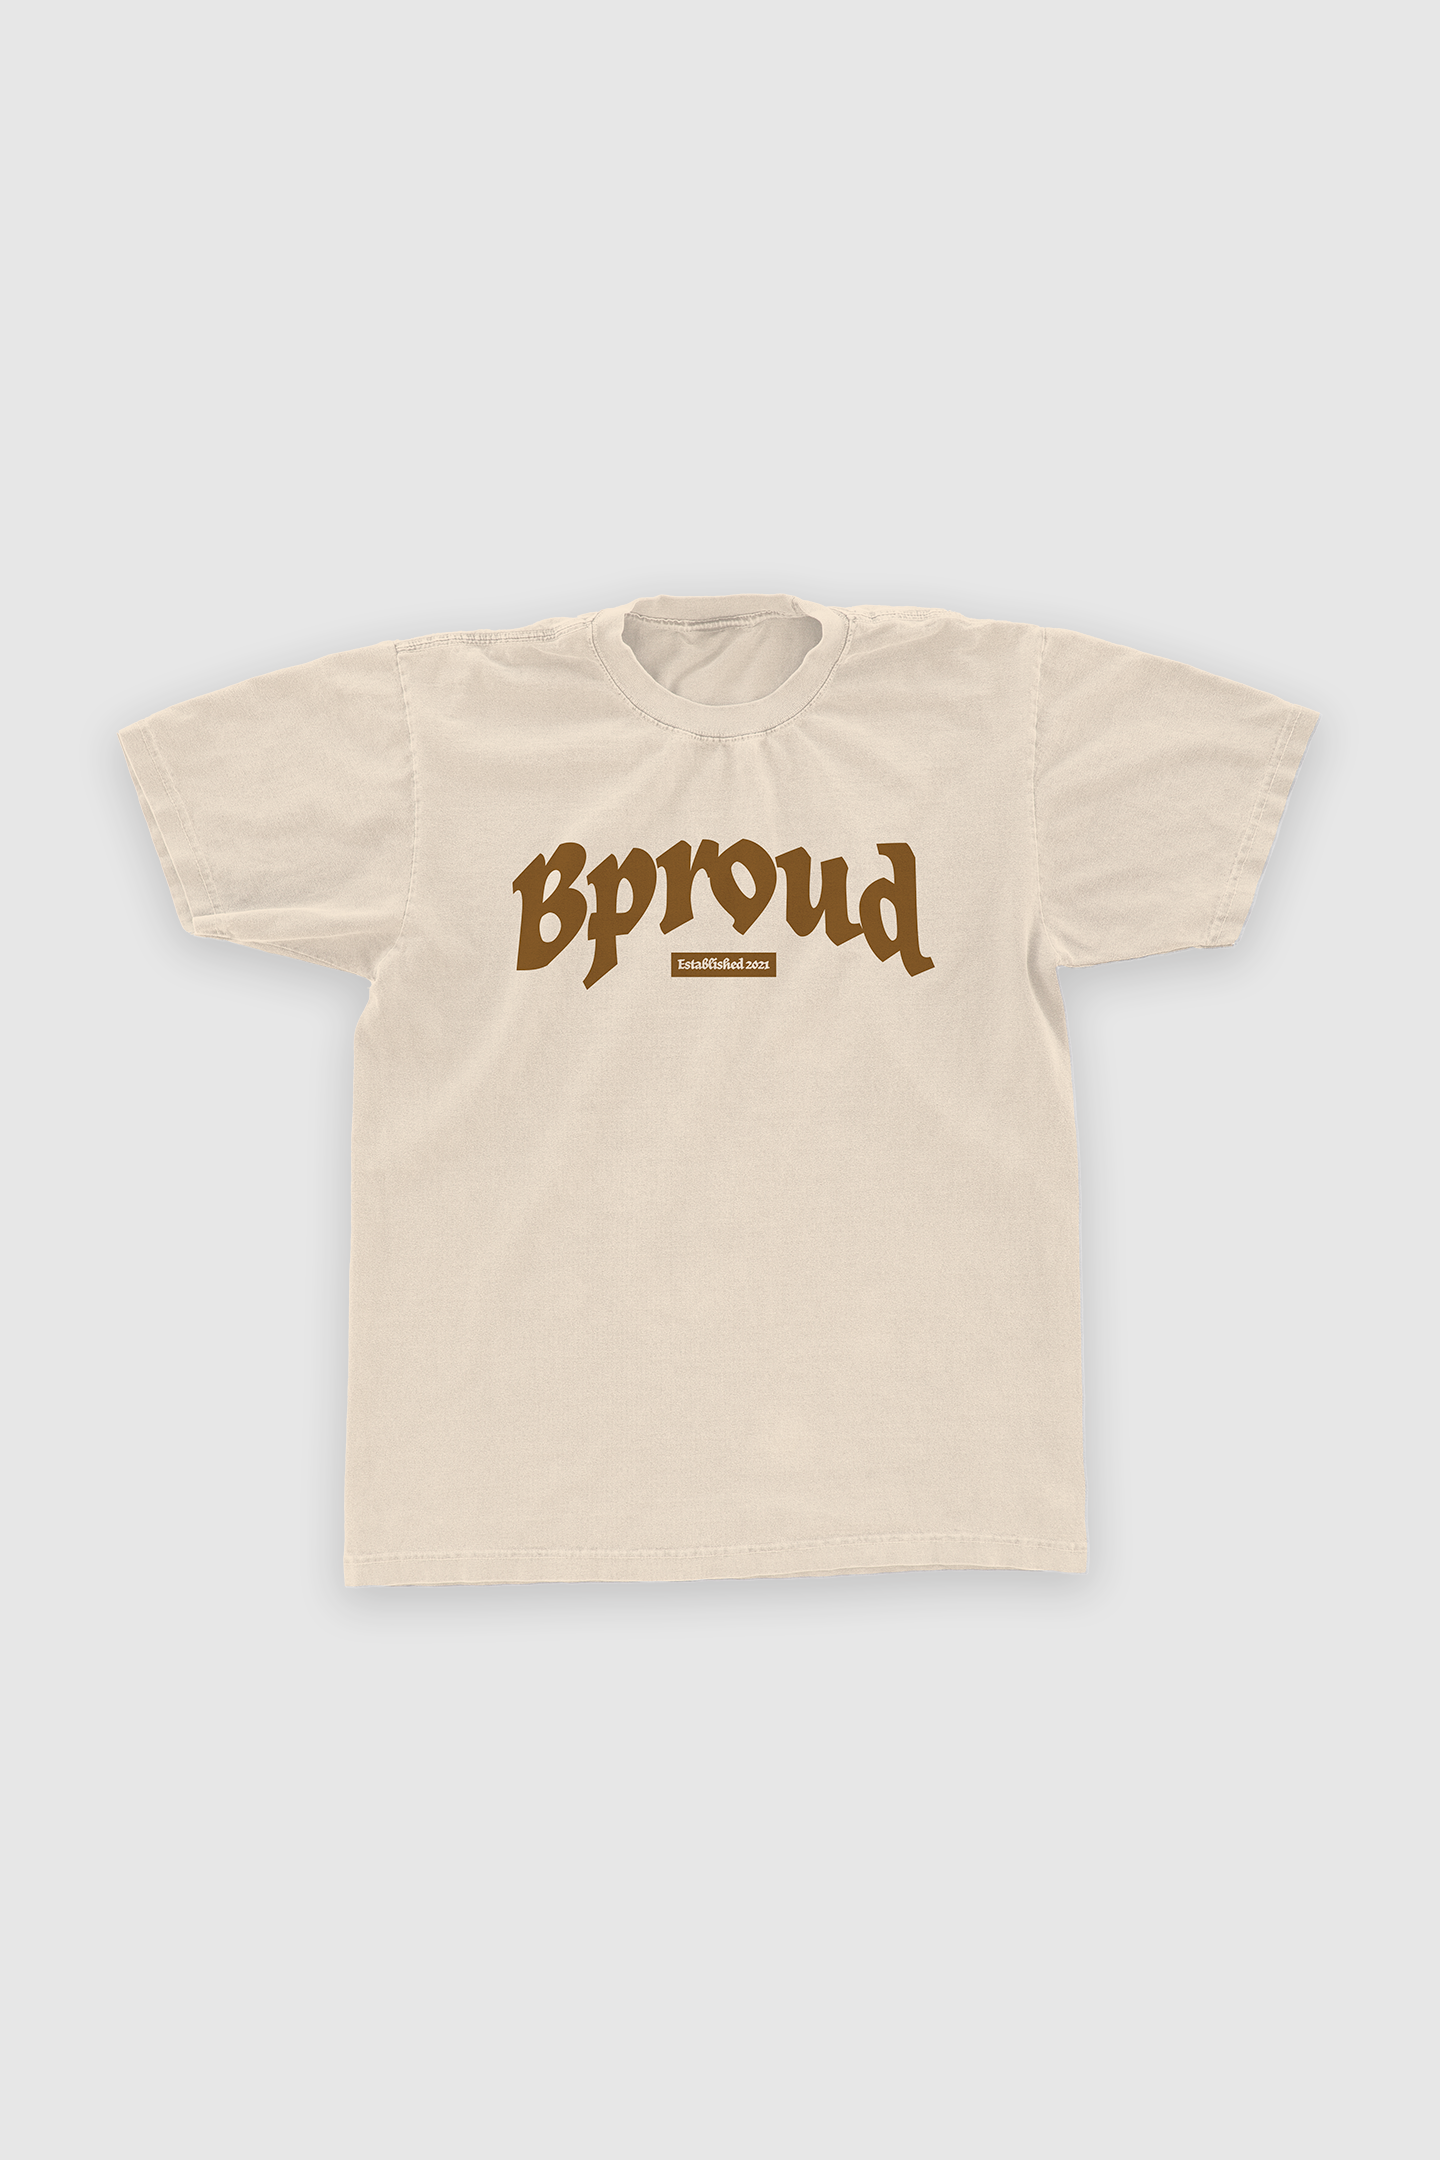 Bproud "Proud of Where I Am" T-Shirt